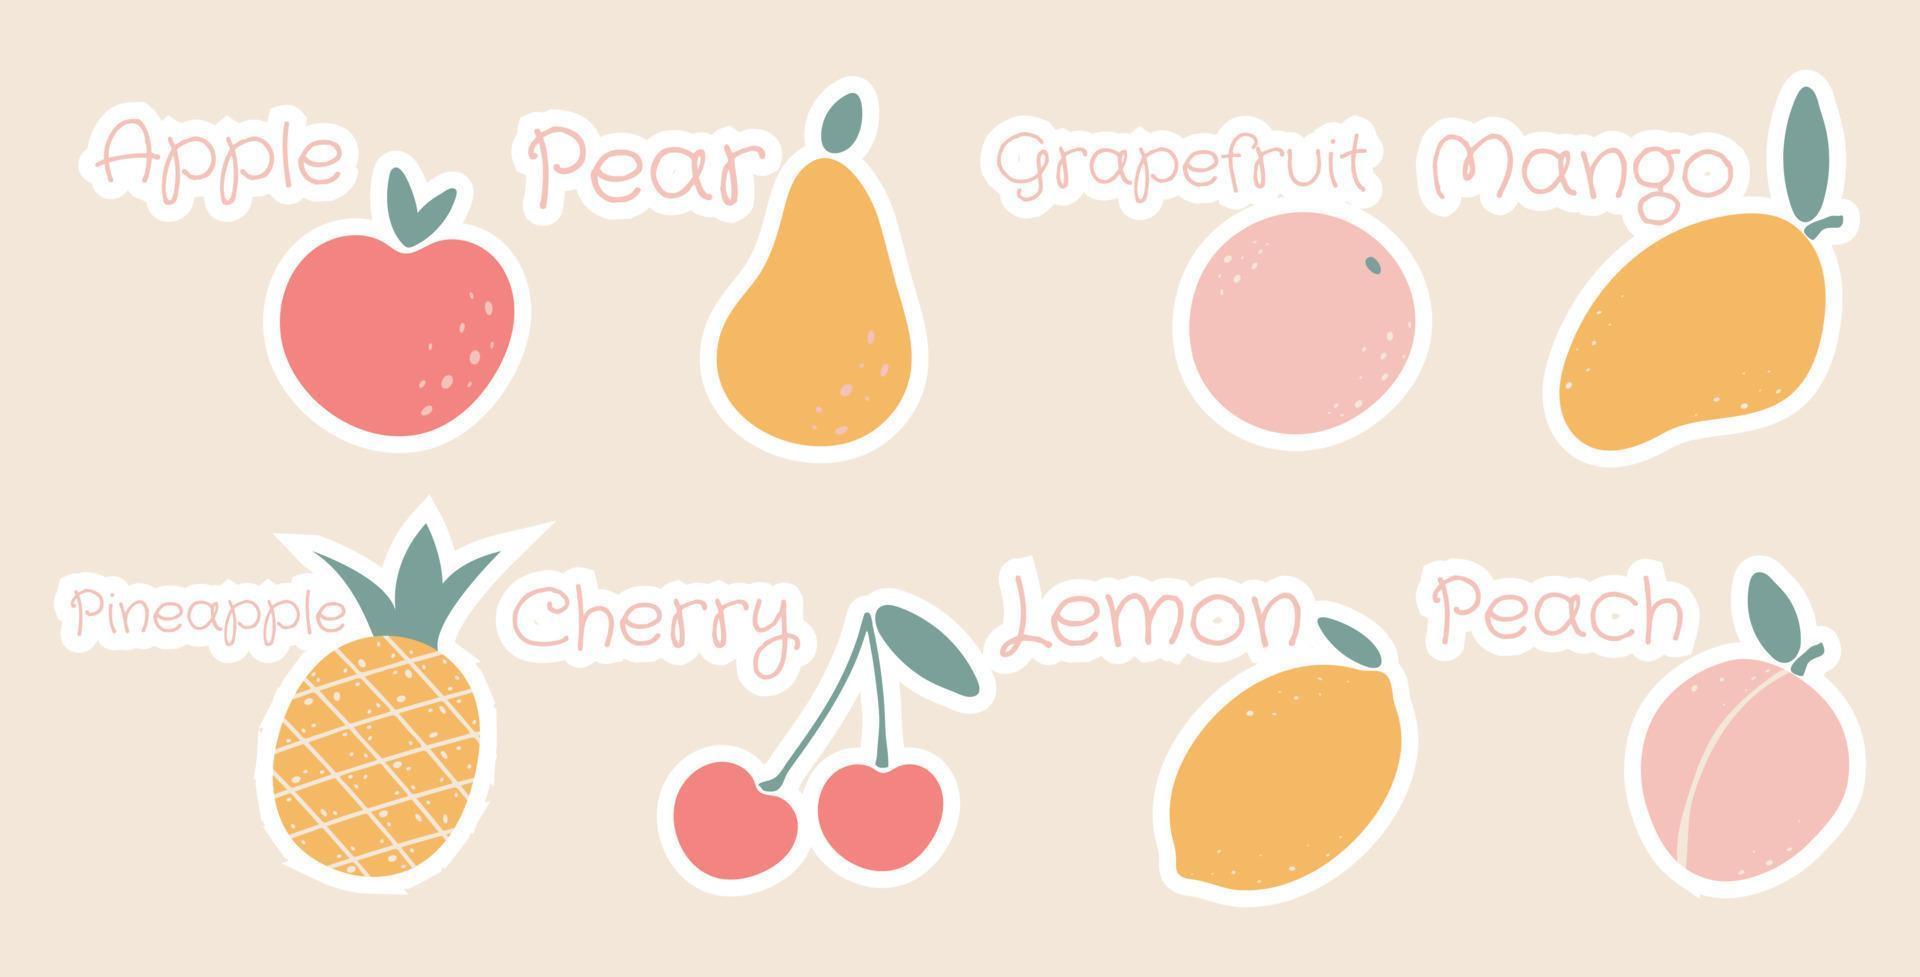 Abstract fruit shapes art print elements. Minimalist apple, pear, grapefruit, lemon, pineapple, cherry, mango, peach vector illustration.